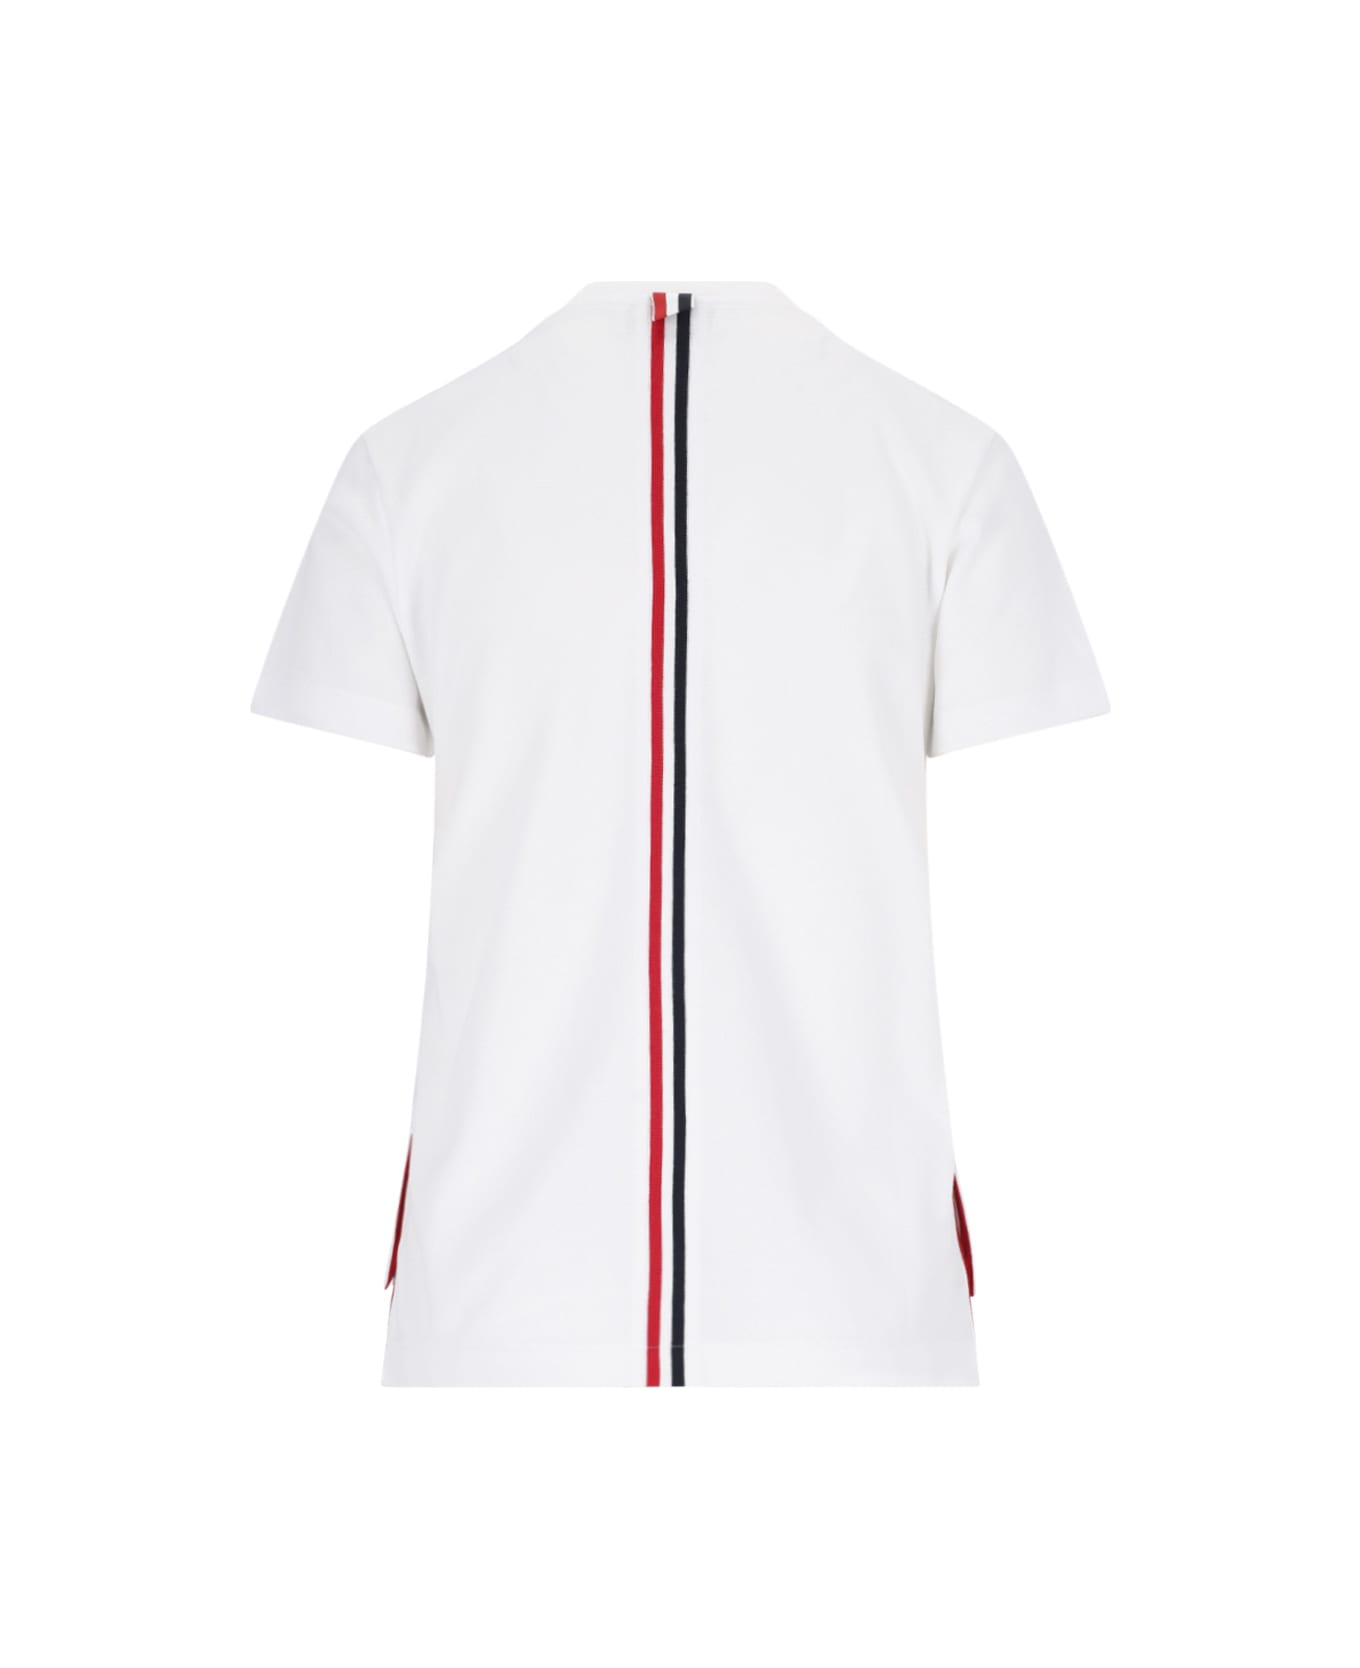 Thom Browne - Striped Band t-shirt - White